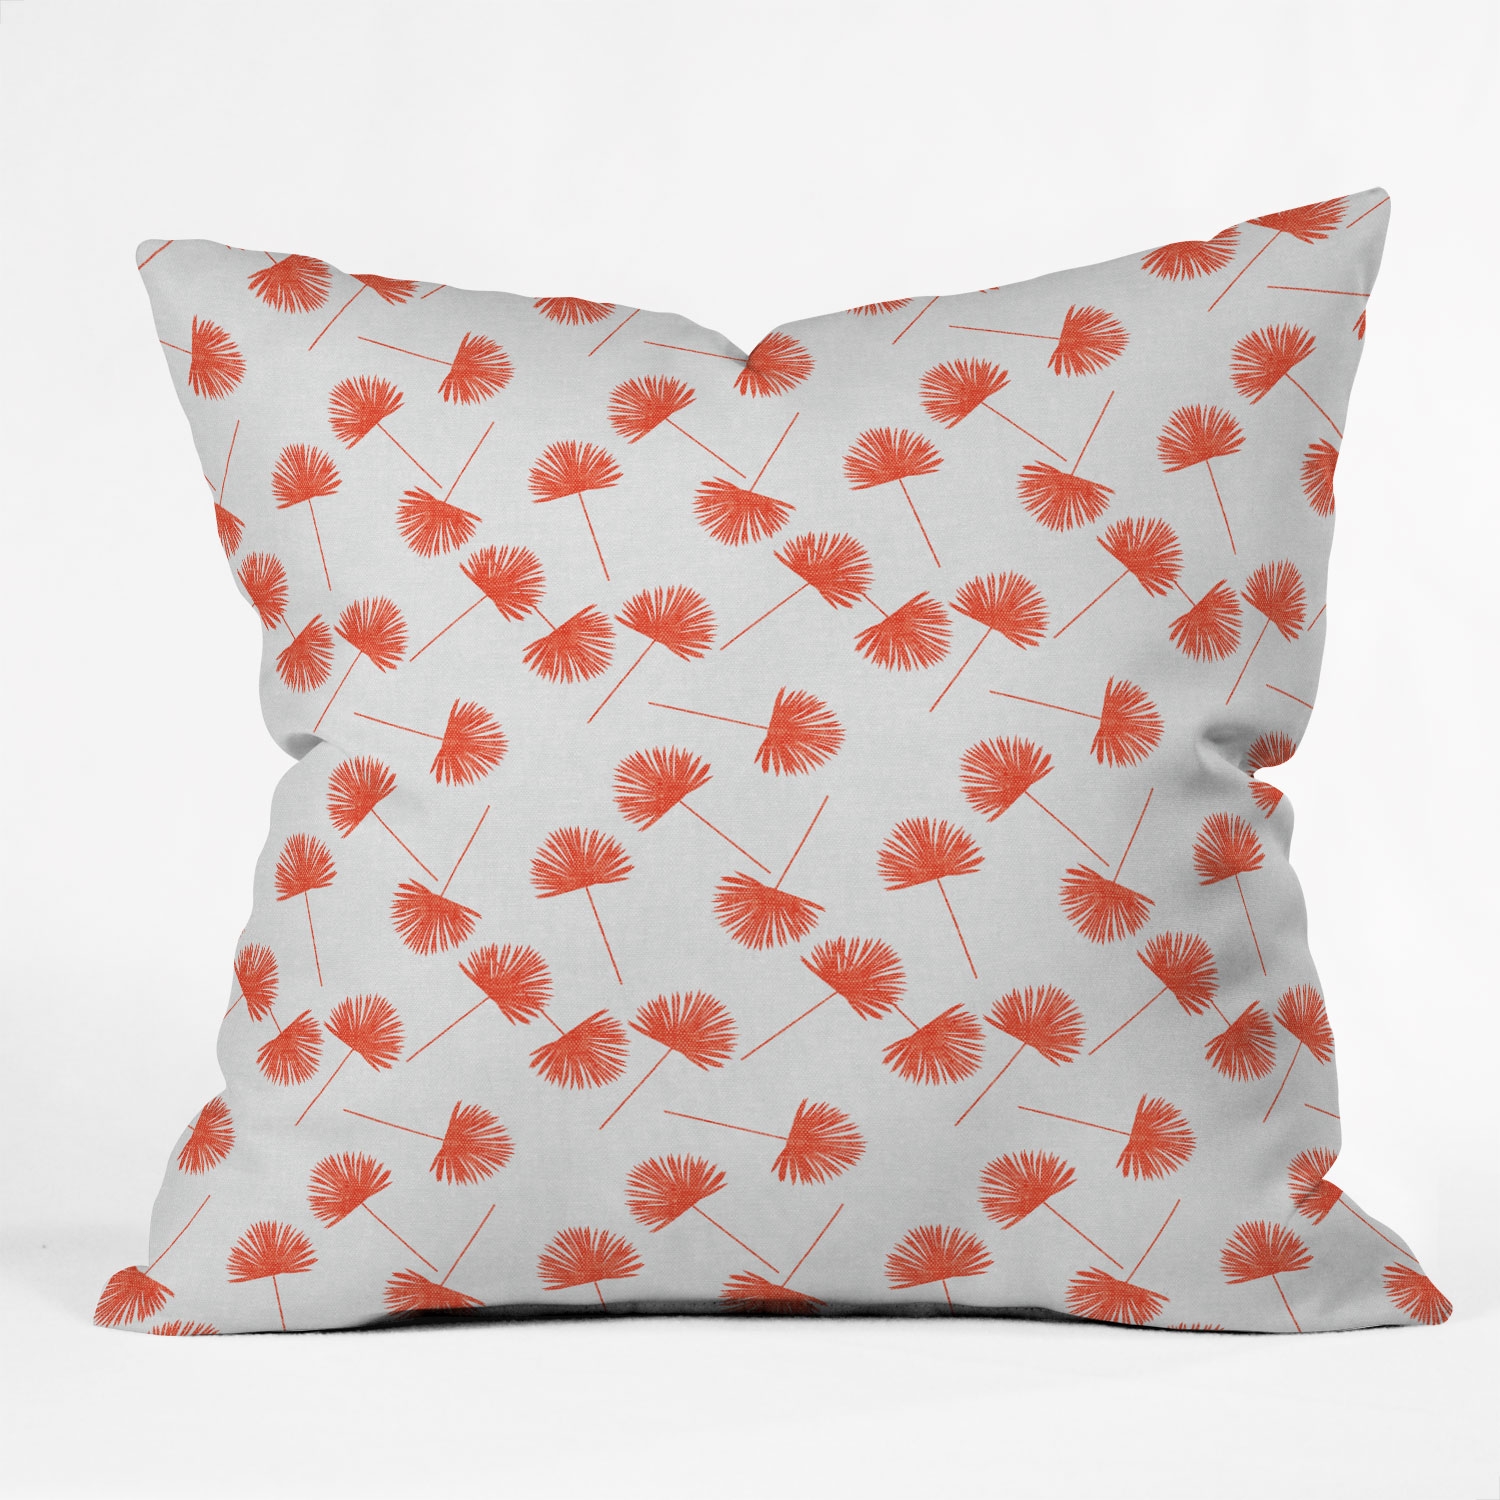 Woven Fan Palm In Orange by Little Arrow Design Co - Outdoor Throw Pillow 20" x 20" - Image 1